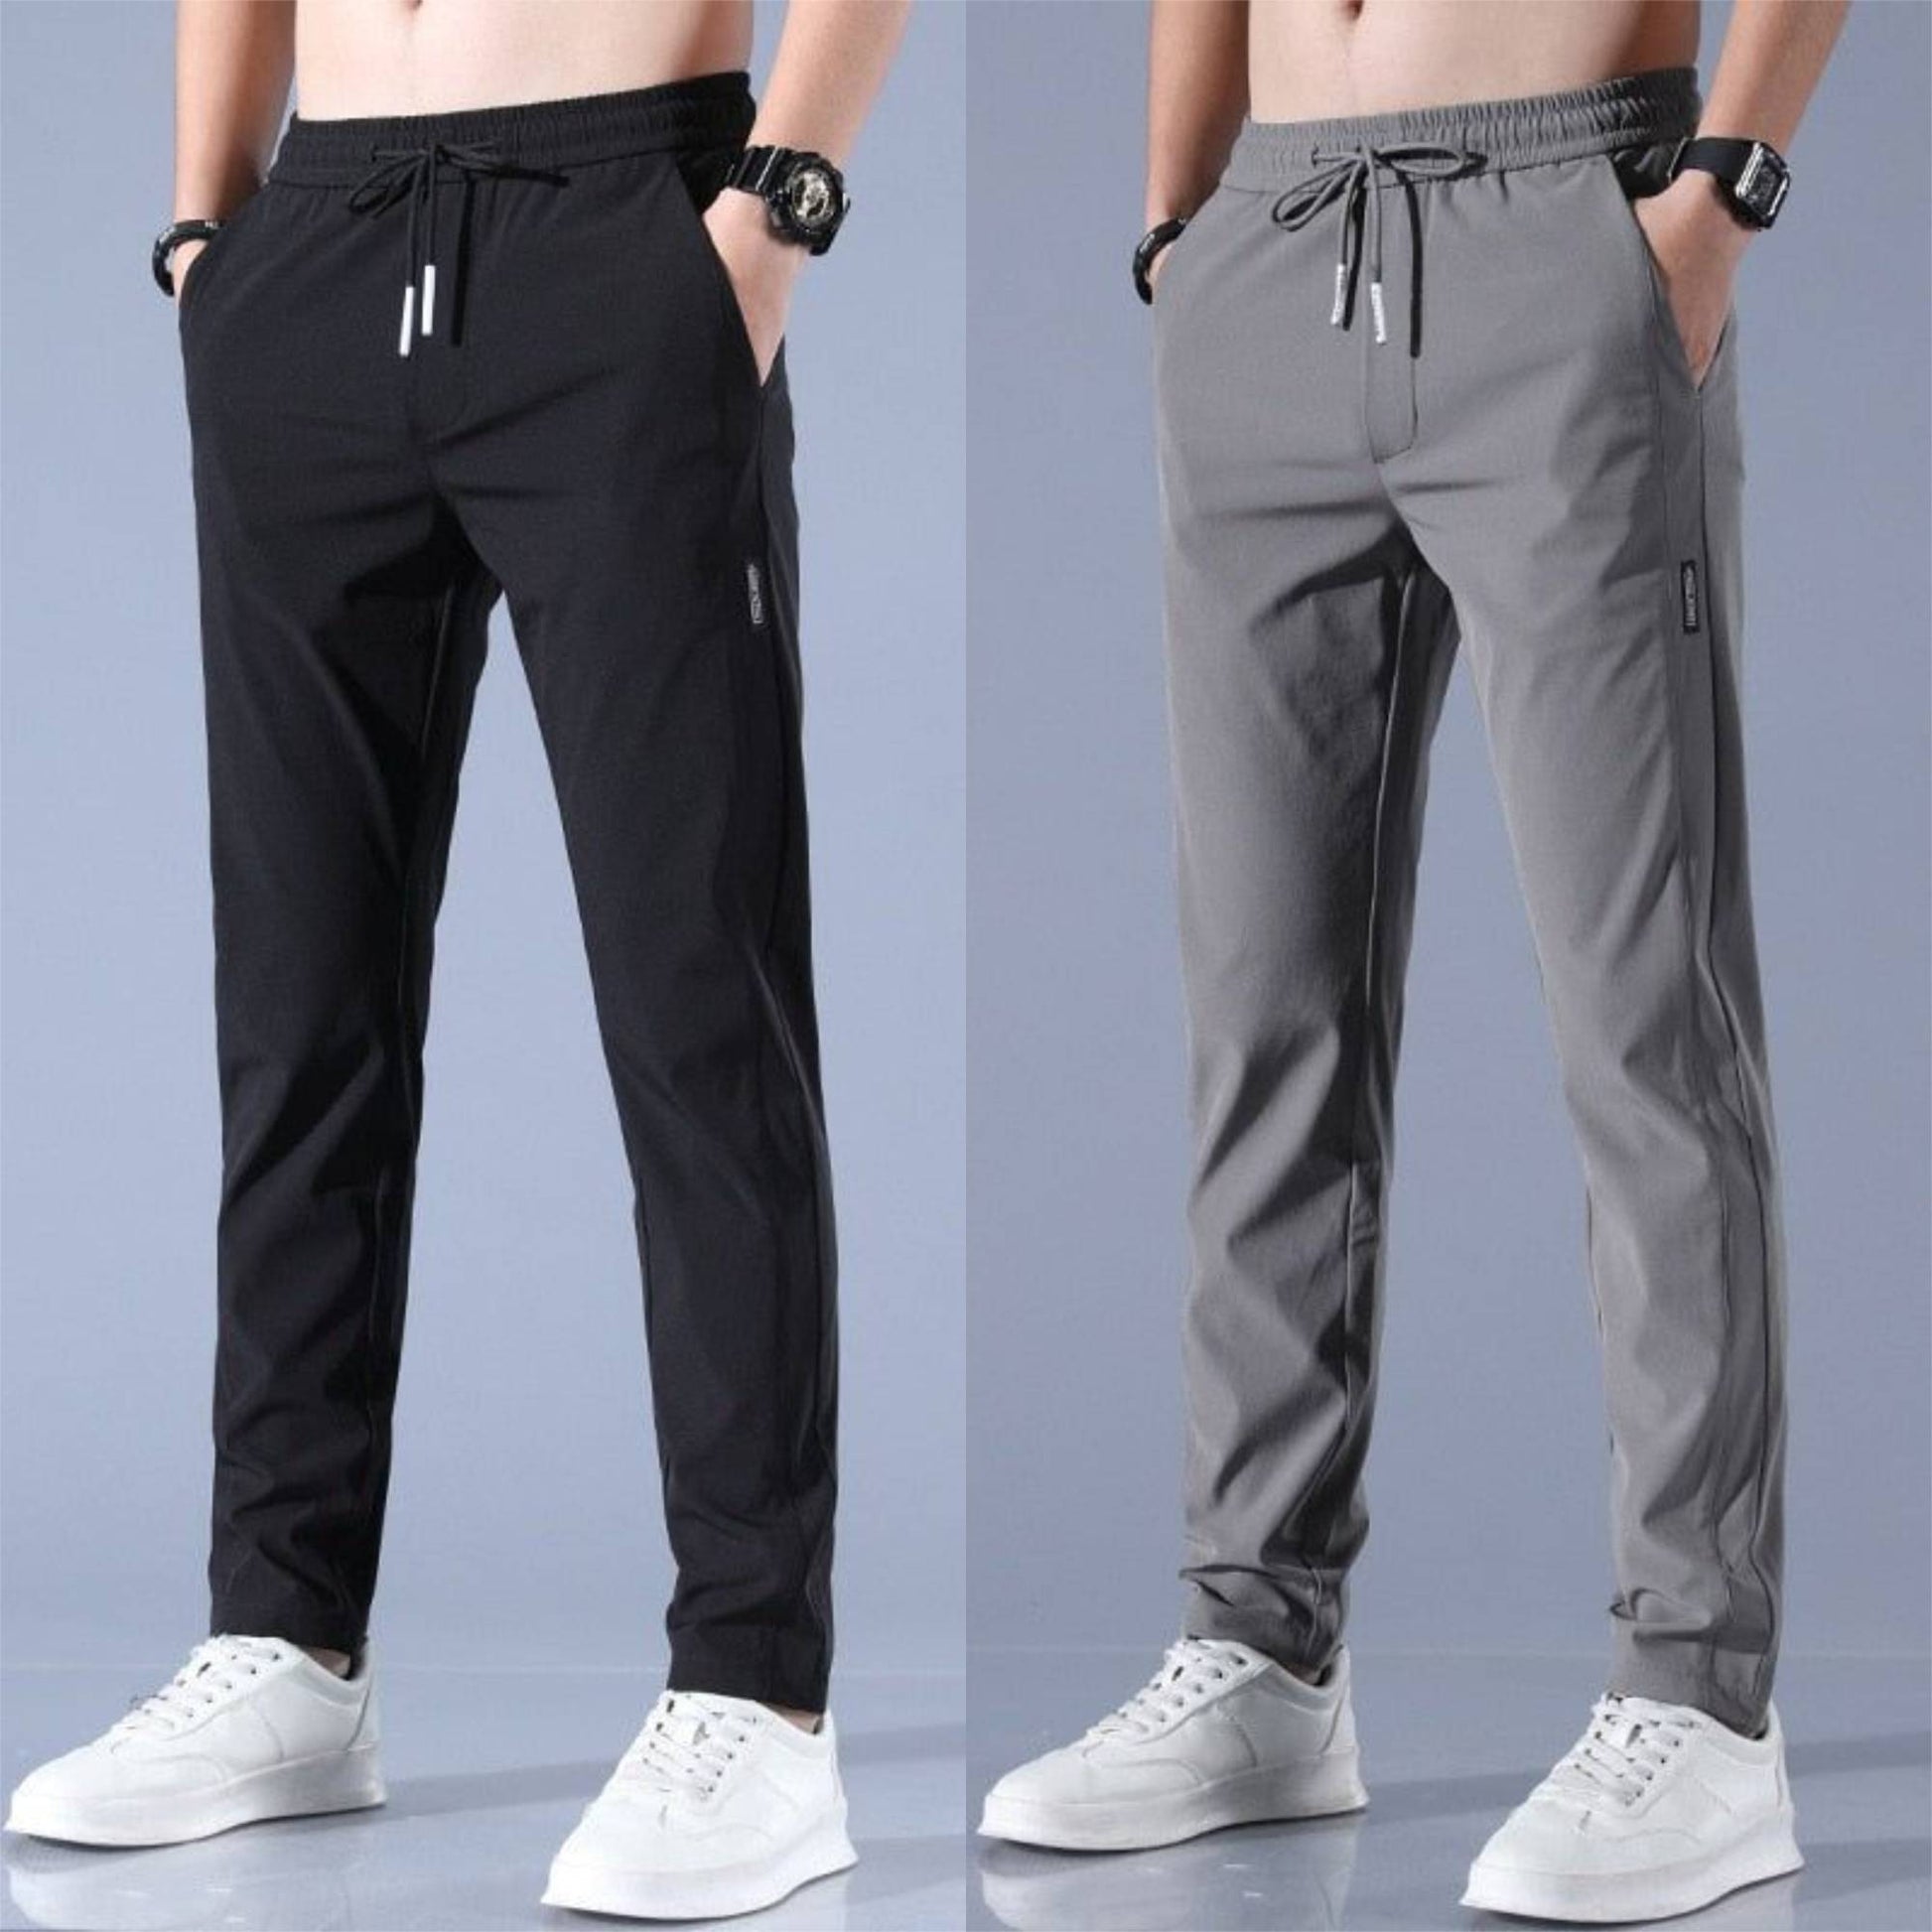 Stefan | SpeedDry Flexible Pants (1+1 FREE) - Black / Dark Gray / L - AMVIM